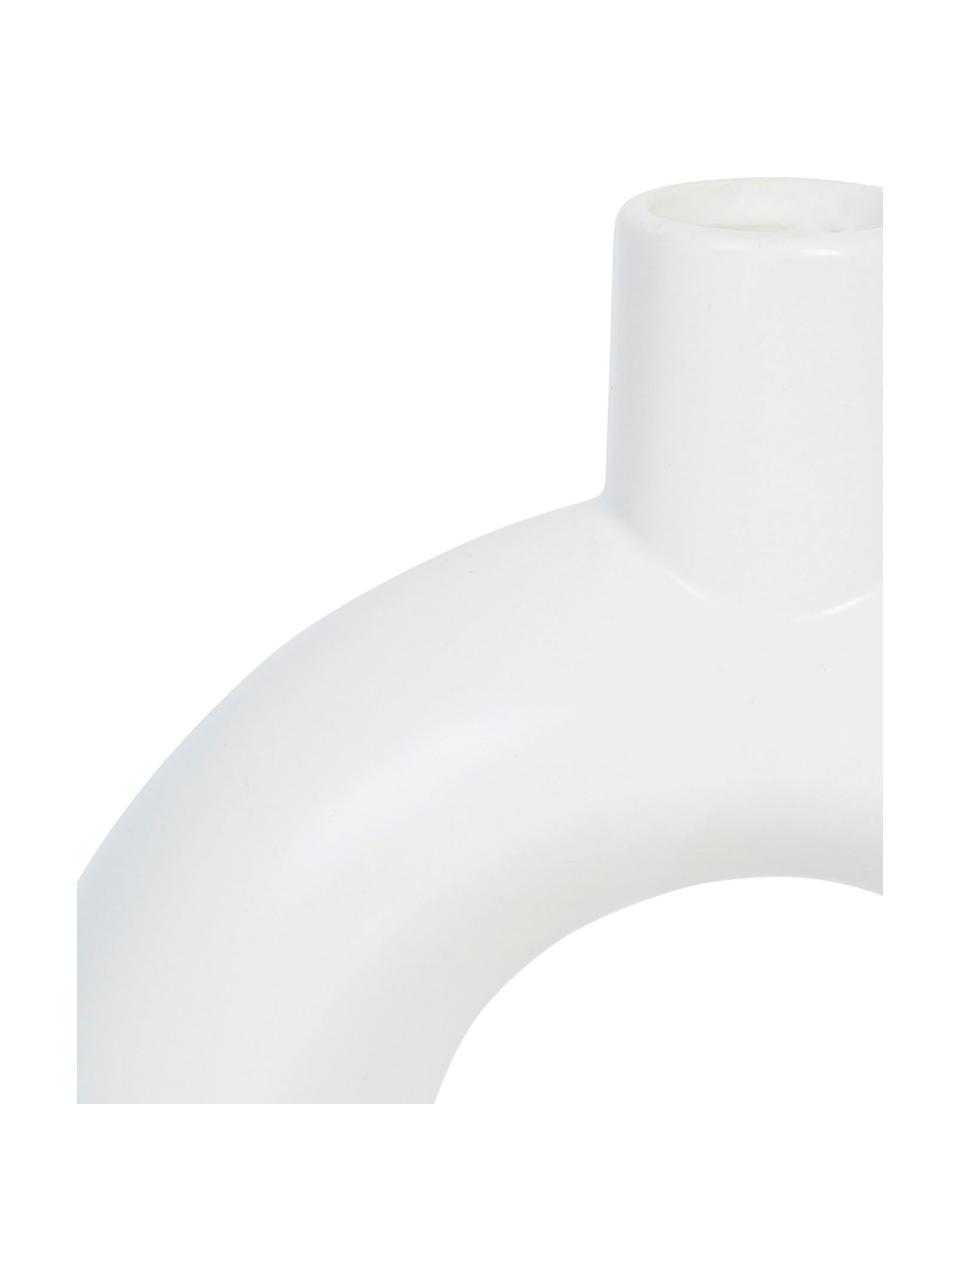 Vase grès cérame blanc Oleo, Grès cérame, Blanc, brillant, larg. 19 x haut. 24 cm